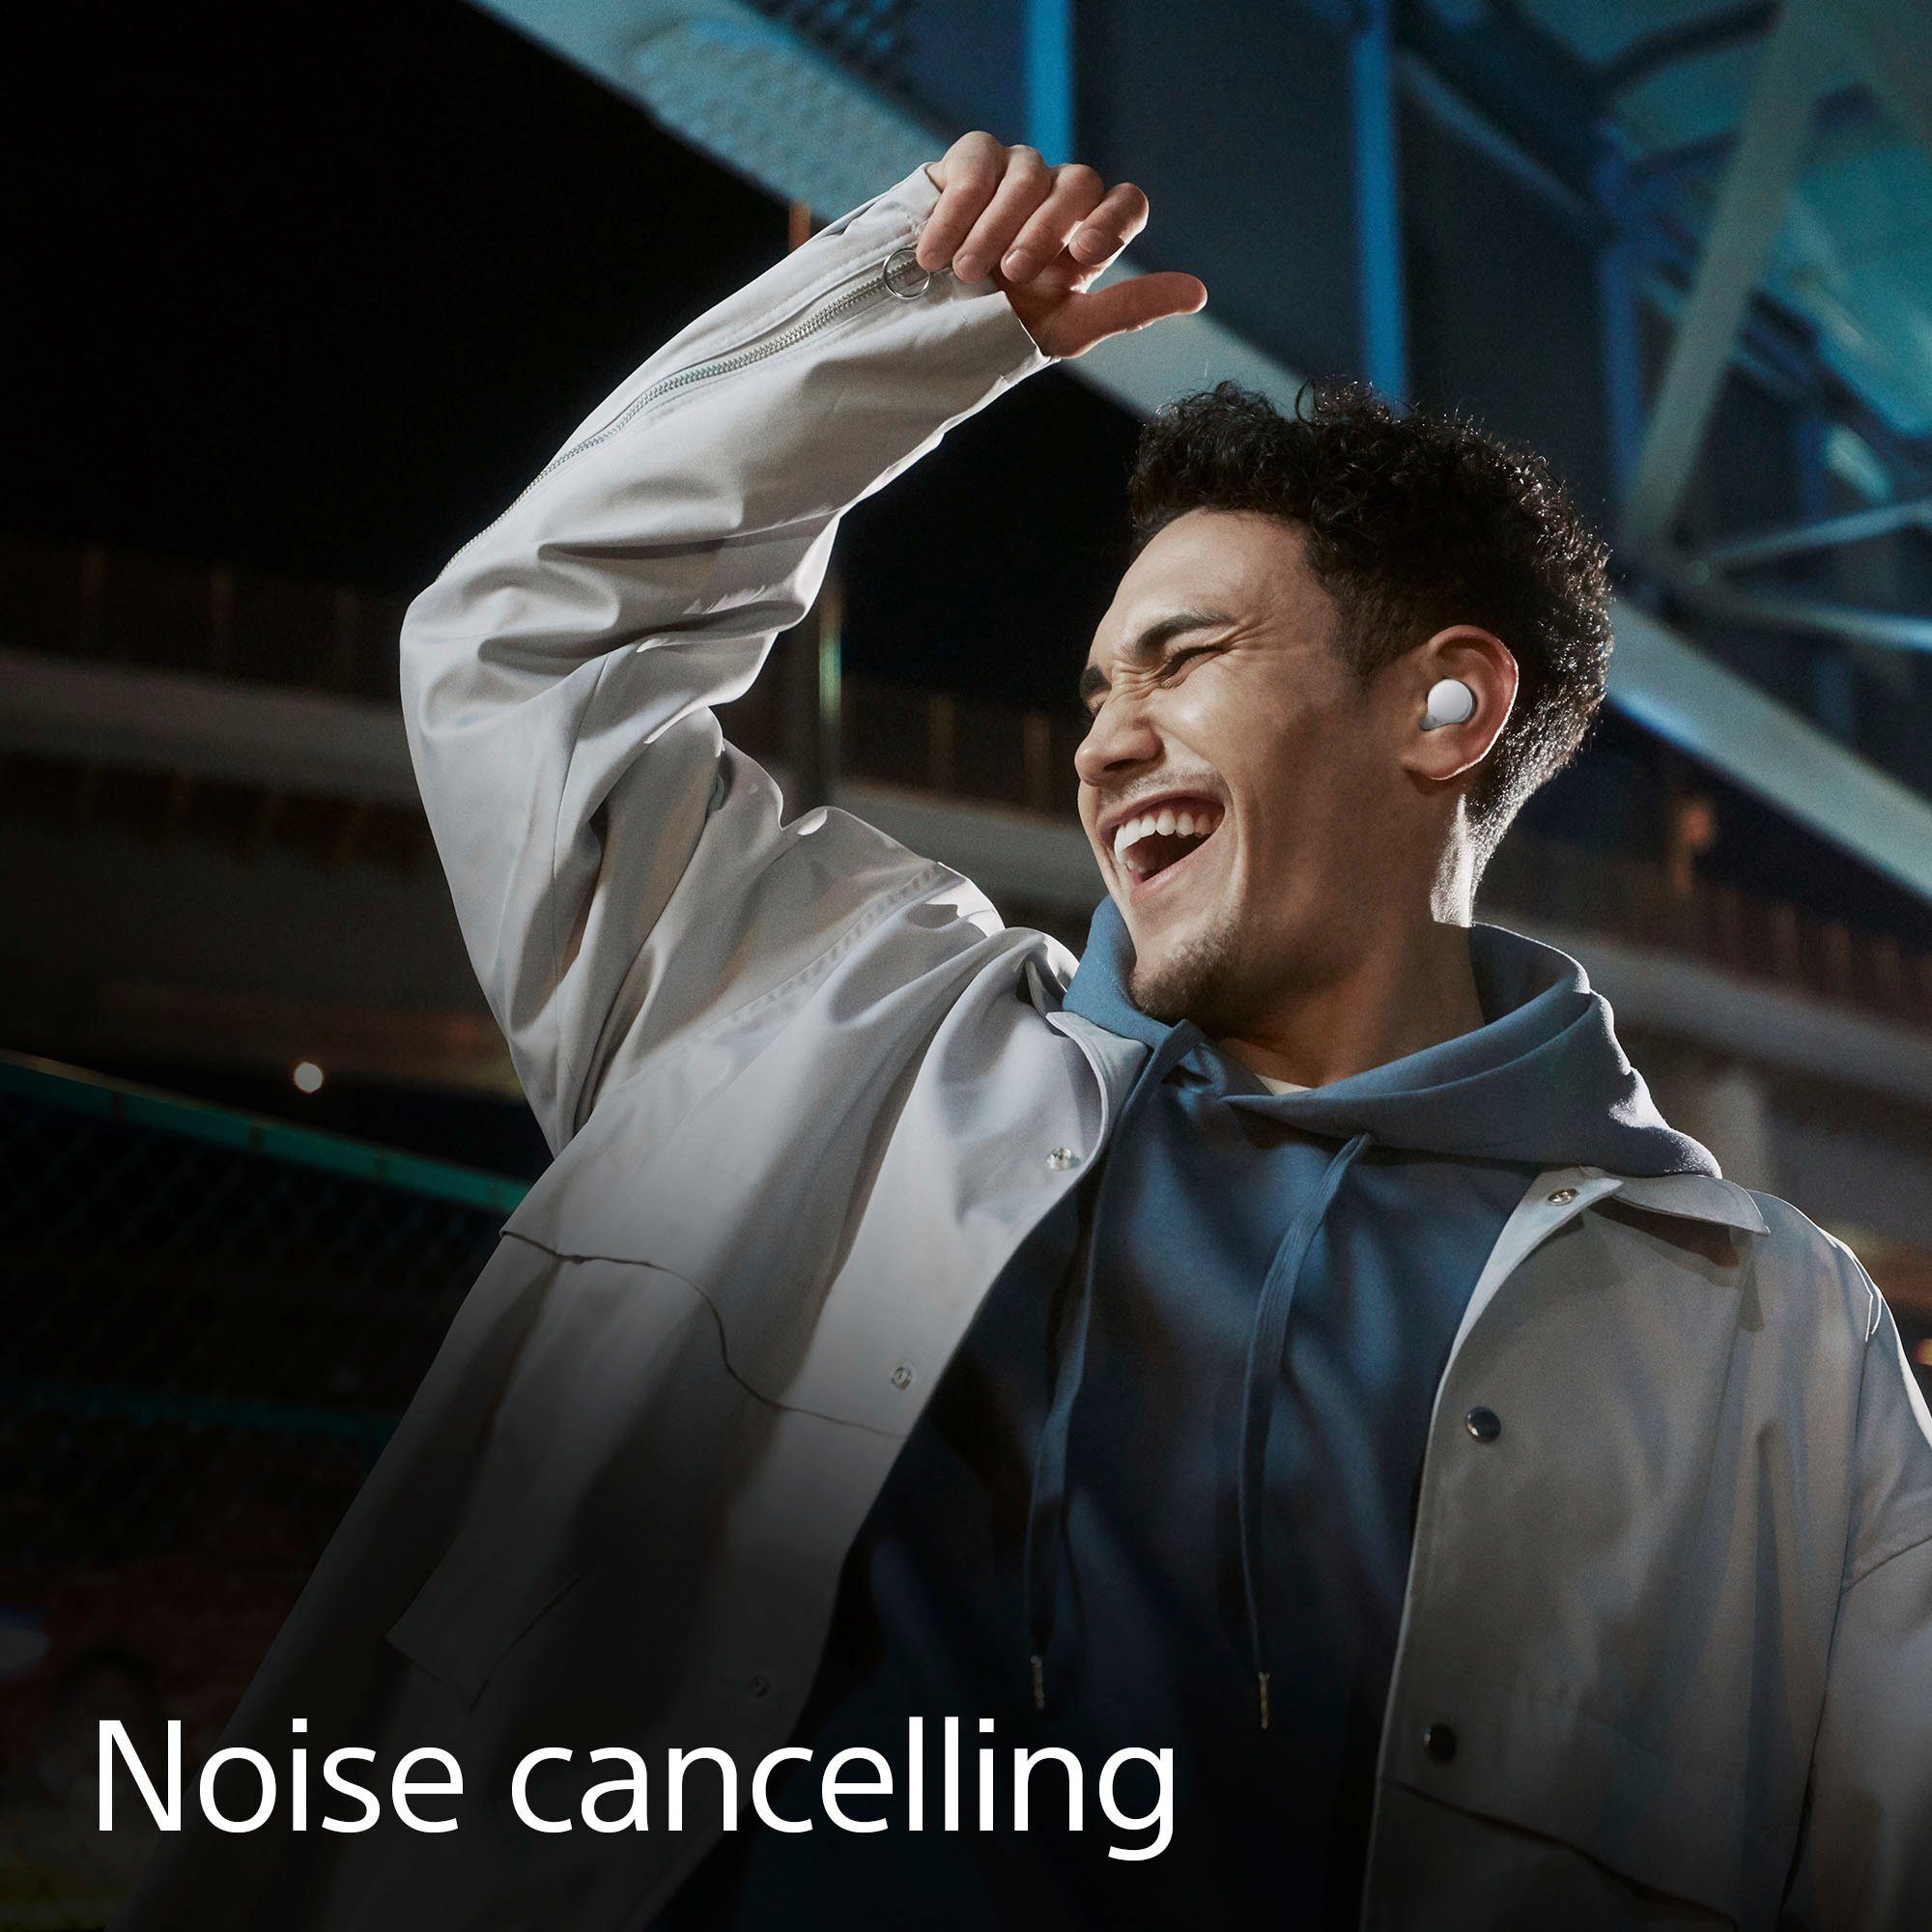 Sony LinkBuds S wireless (Noise-Cancelling, Akkulaufzeit) Touch-Steuerung, weiß True 20 Cancelling, Wireless, NFC, Noise st. In-Ear-Kopfhörer Bluetooth